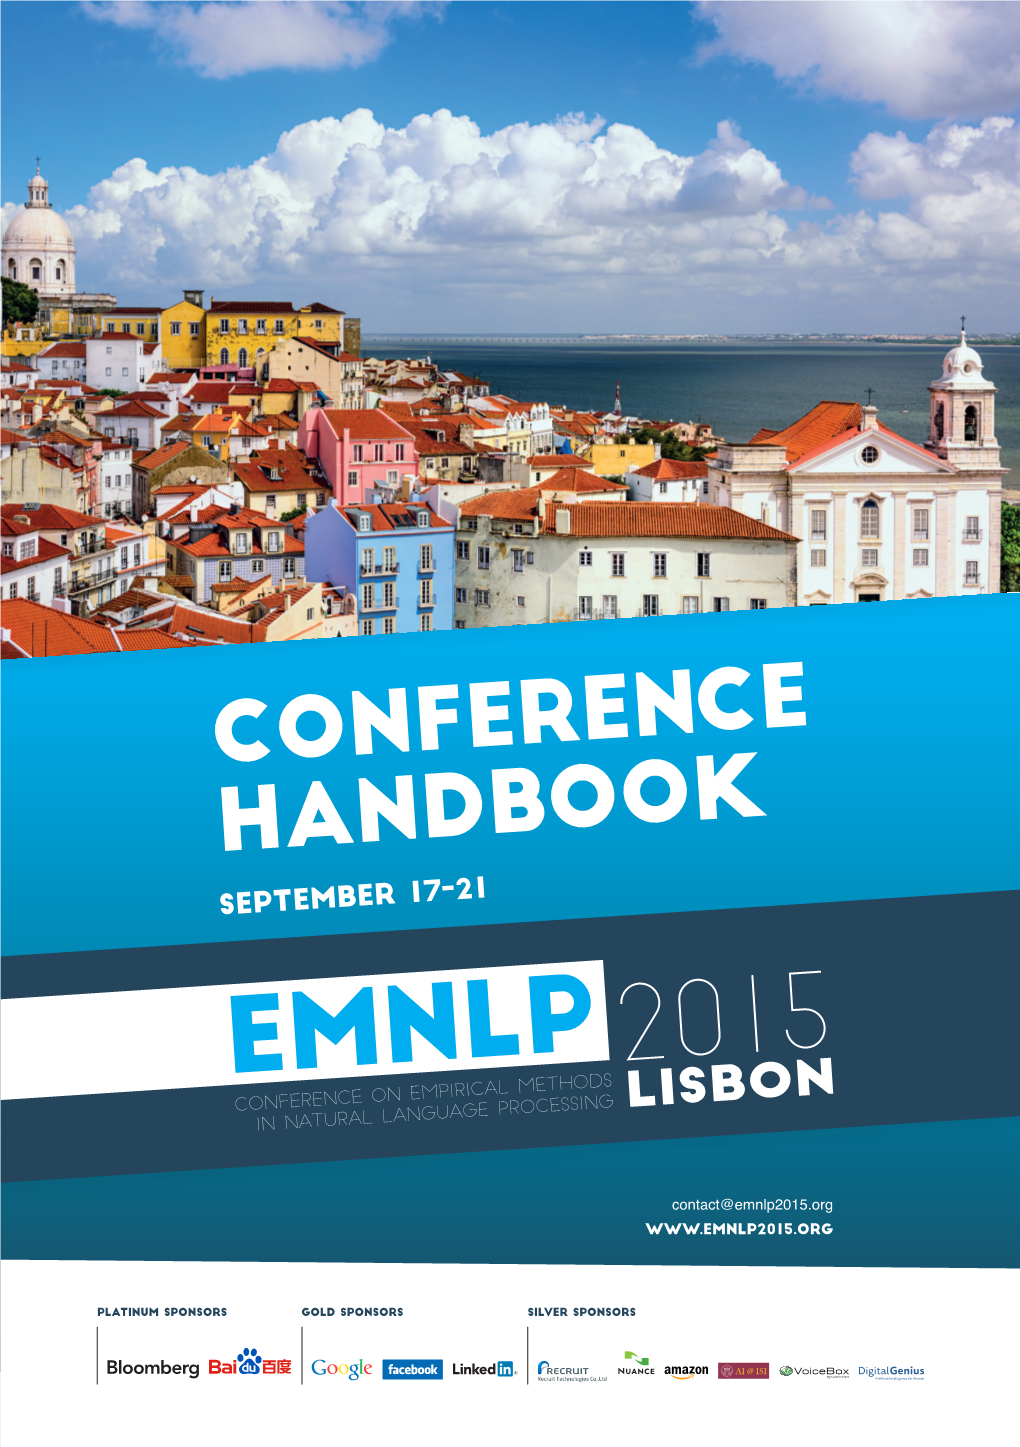 EMNLP 2015 Handbook